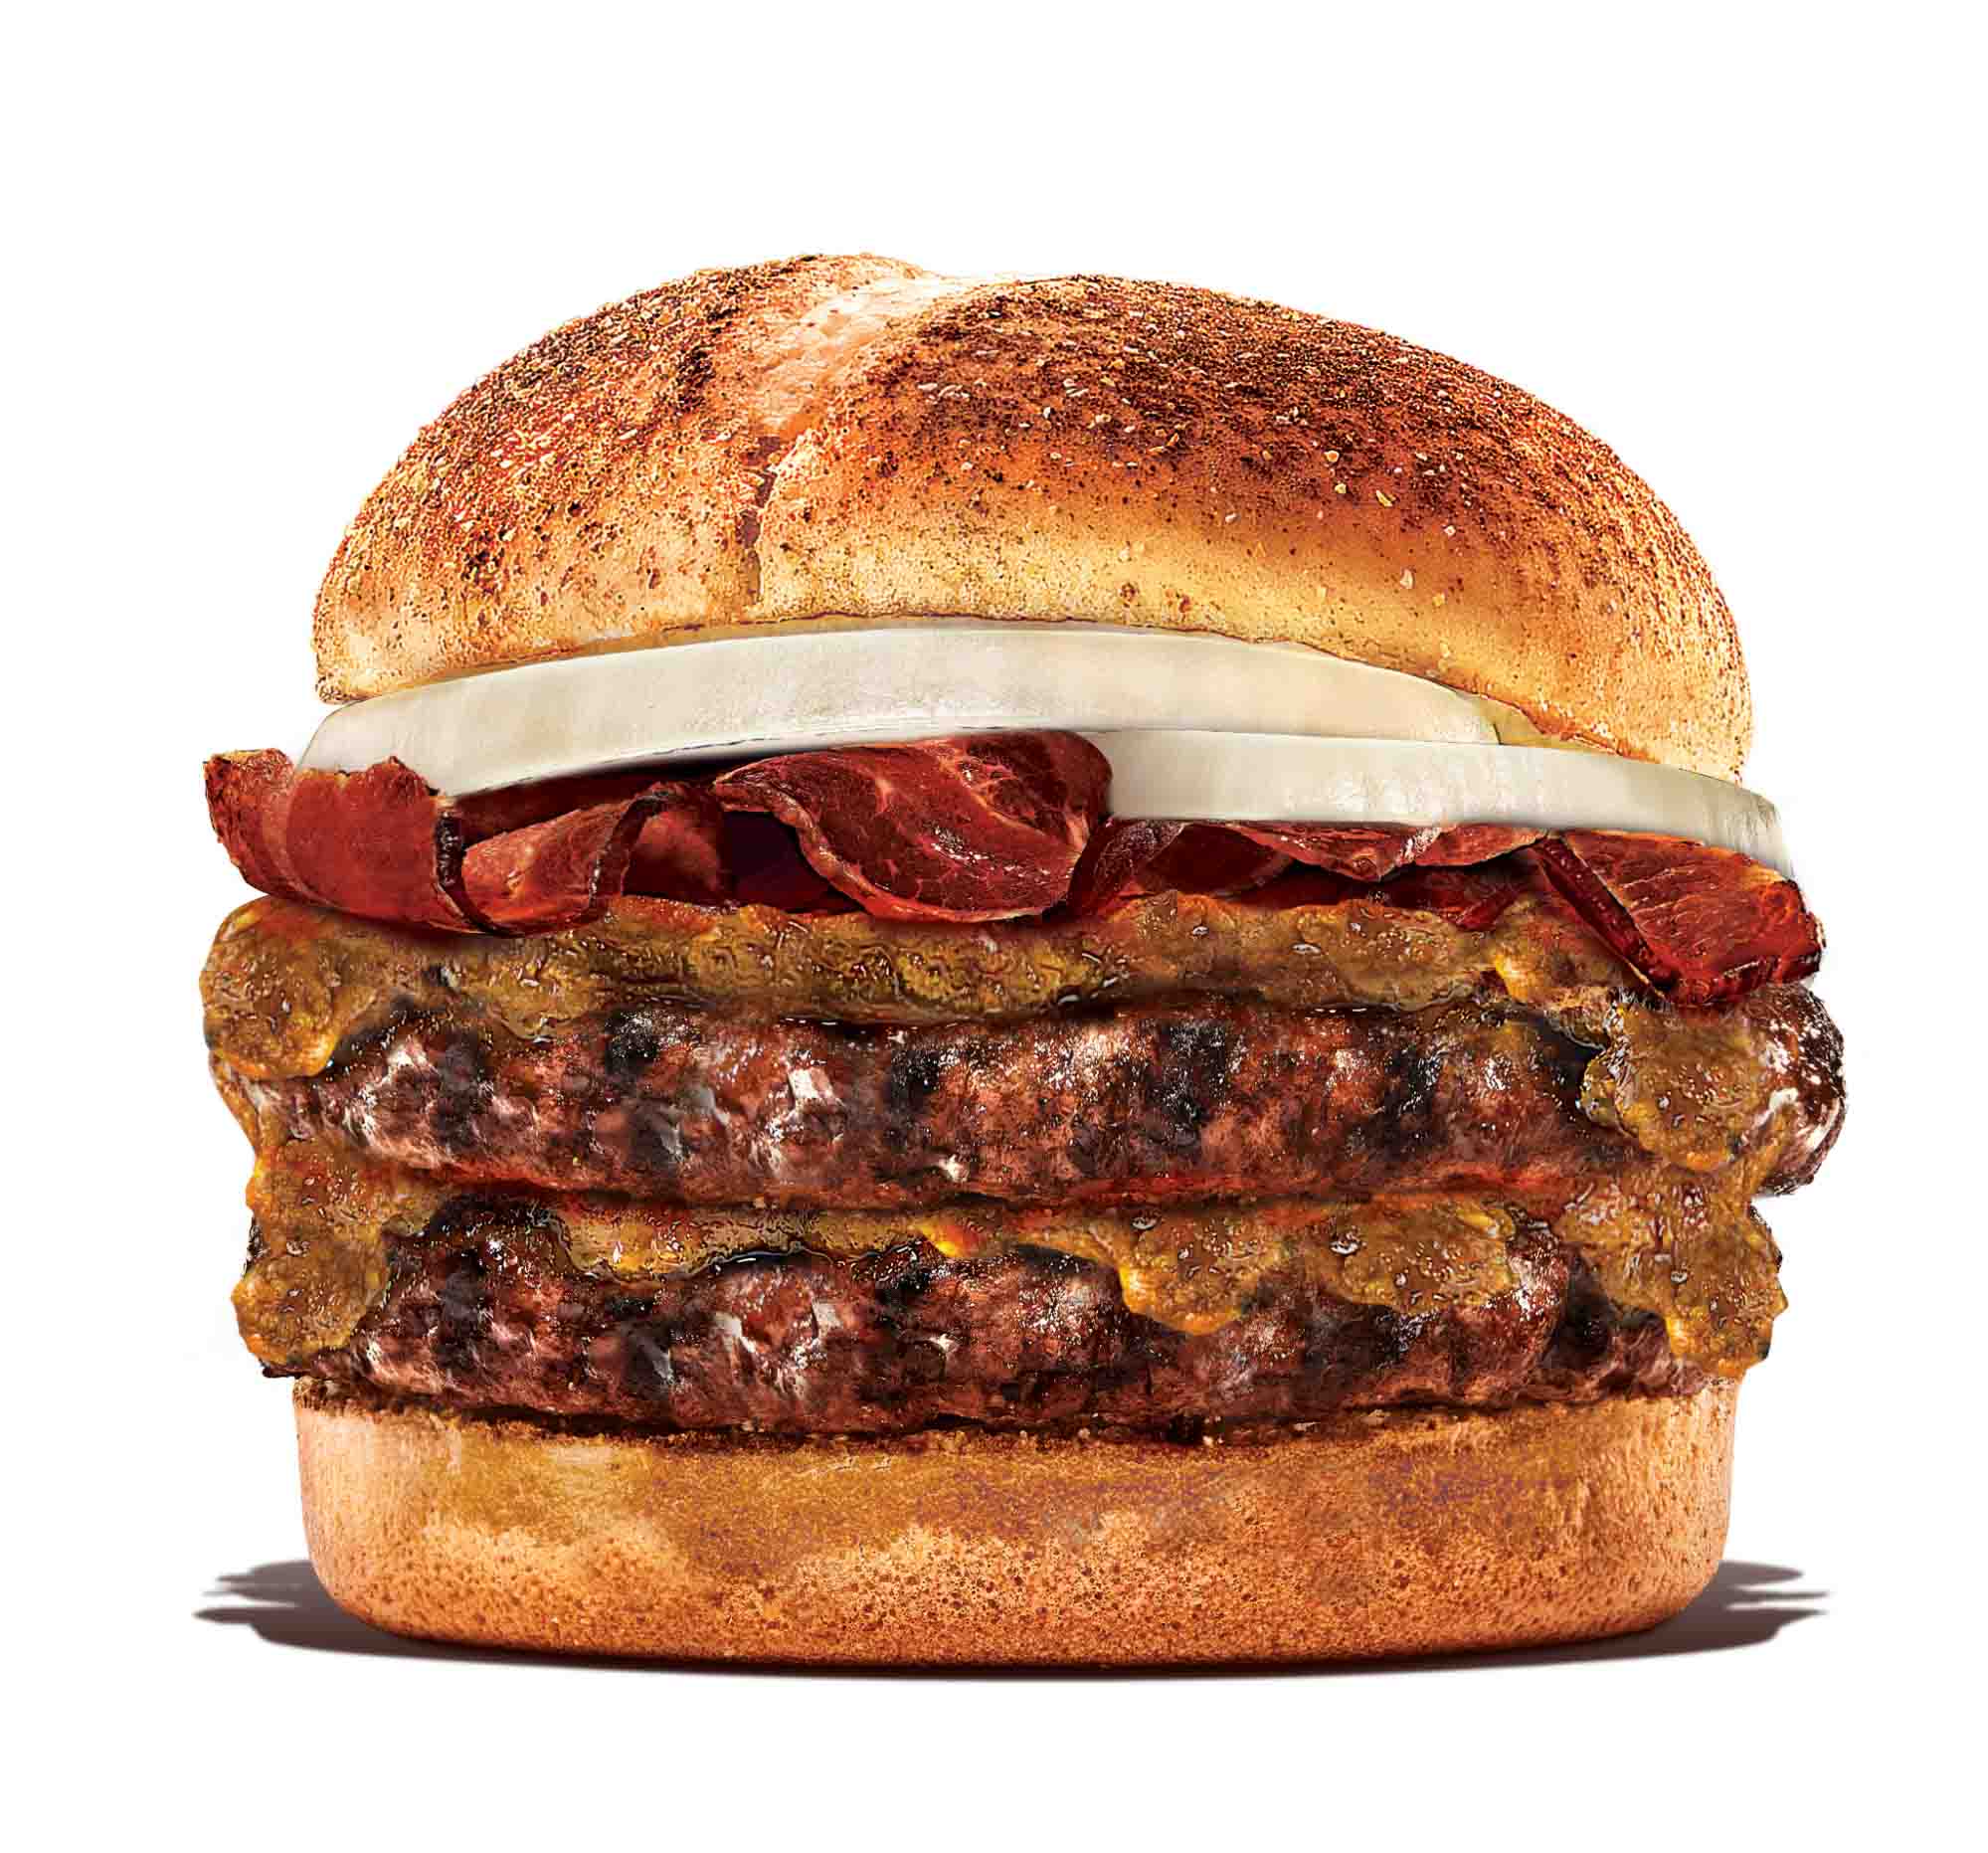 burger king rendang burger 2021 - angus beef burger